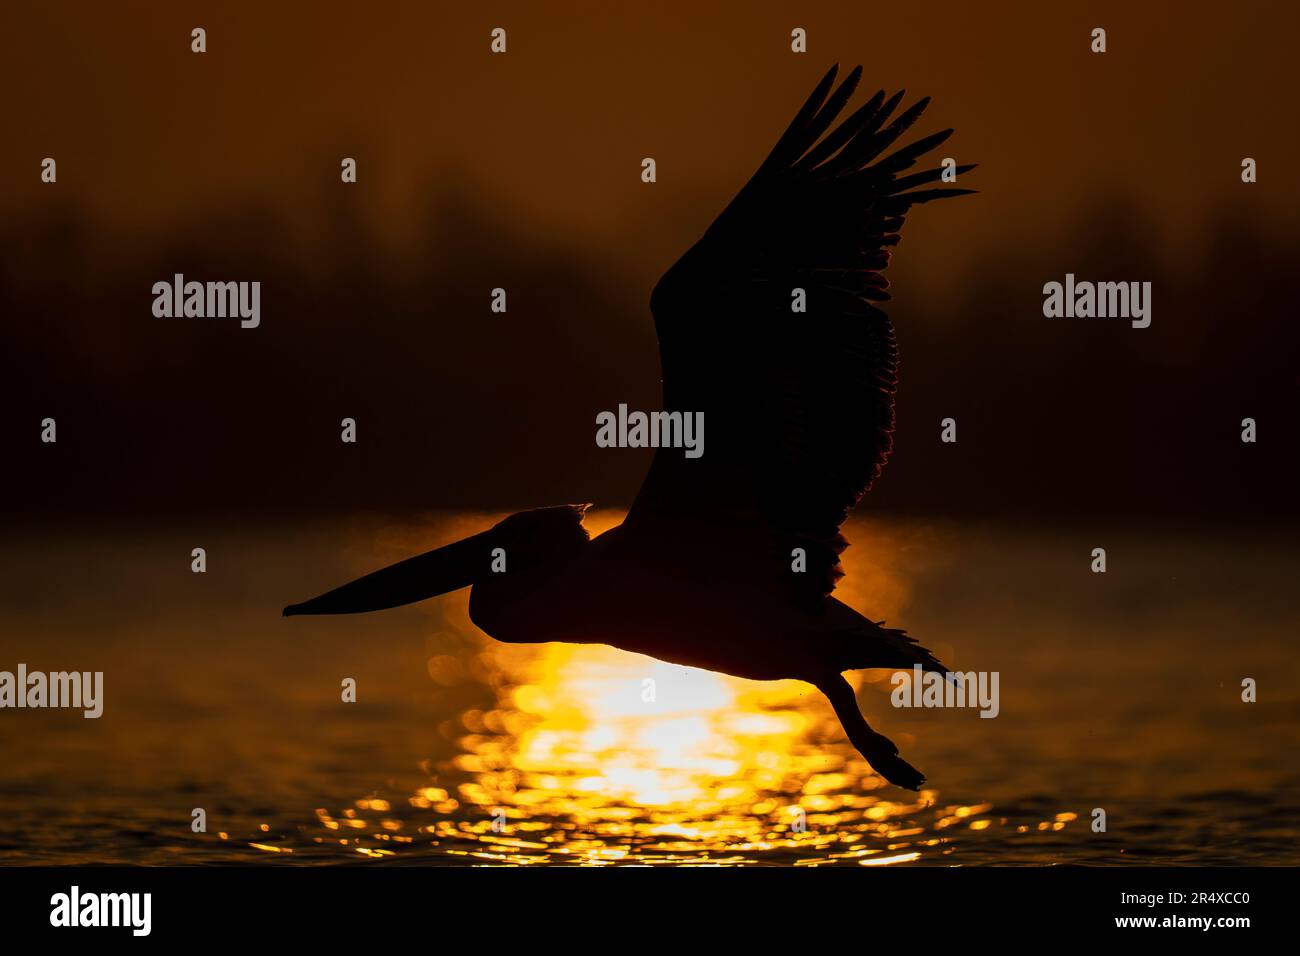 Dalmatian pelican (Pelecanus crispus) flies silhouetted at sunrise over lake; Central Macedonia, Greece Stock Photo